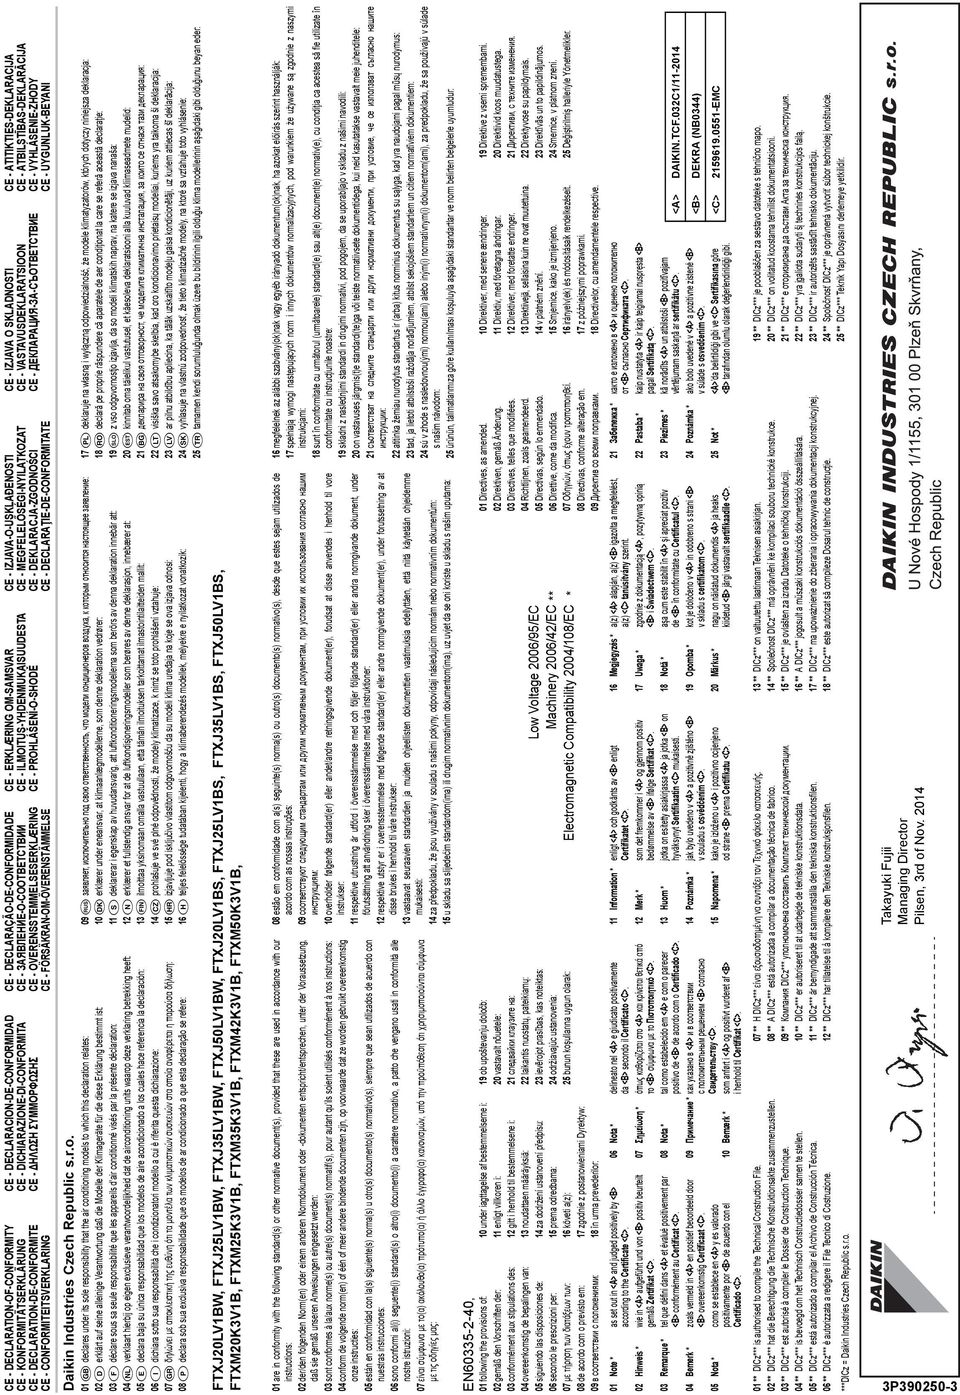 R32 Split Series ΜΟΝΤΈΛΑ - PDF Free Download